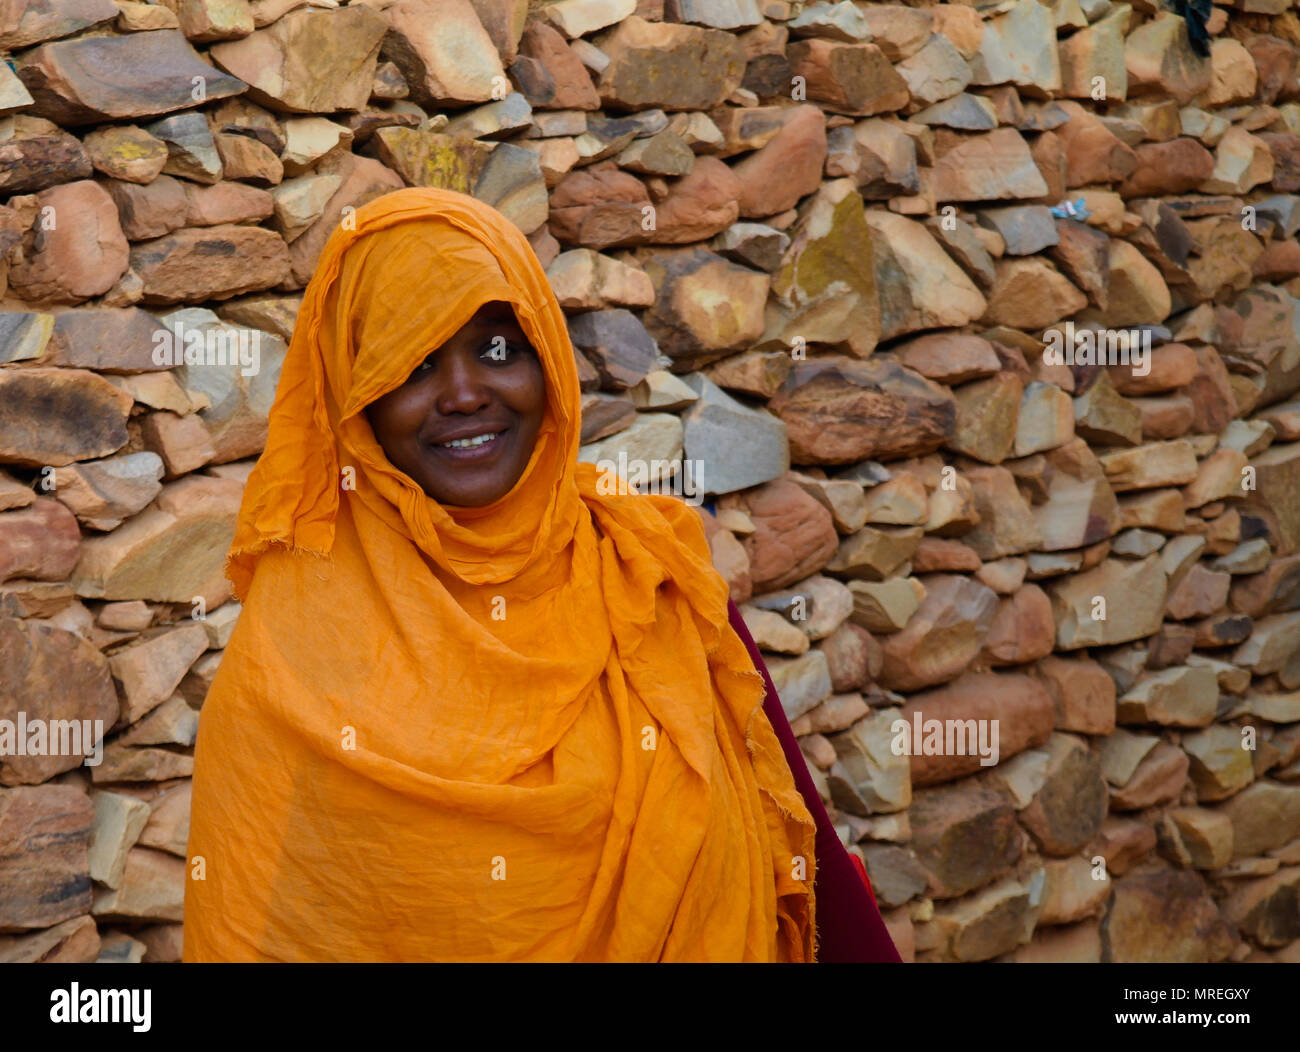 Portrait of mauritanian woman in national dress Melhfa - 10.11.2012 Chinguetti, Mauritania Stock Photo